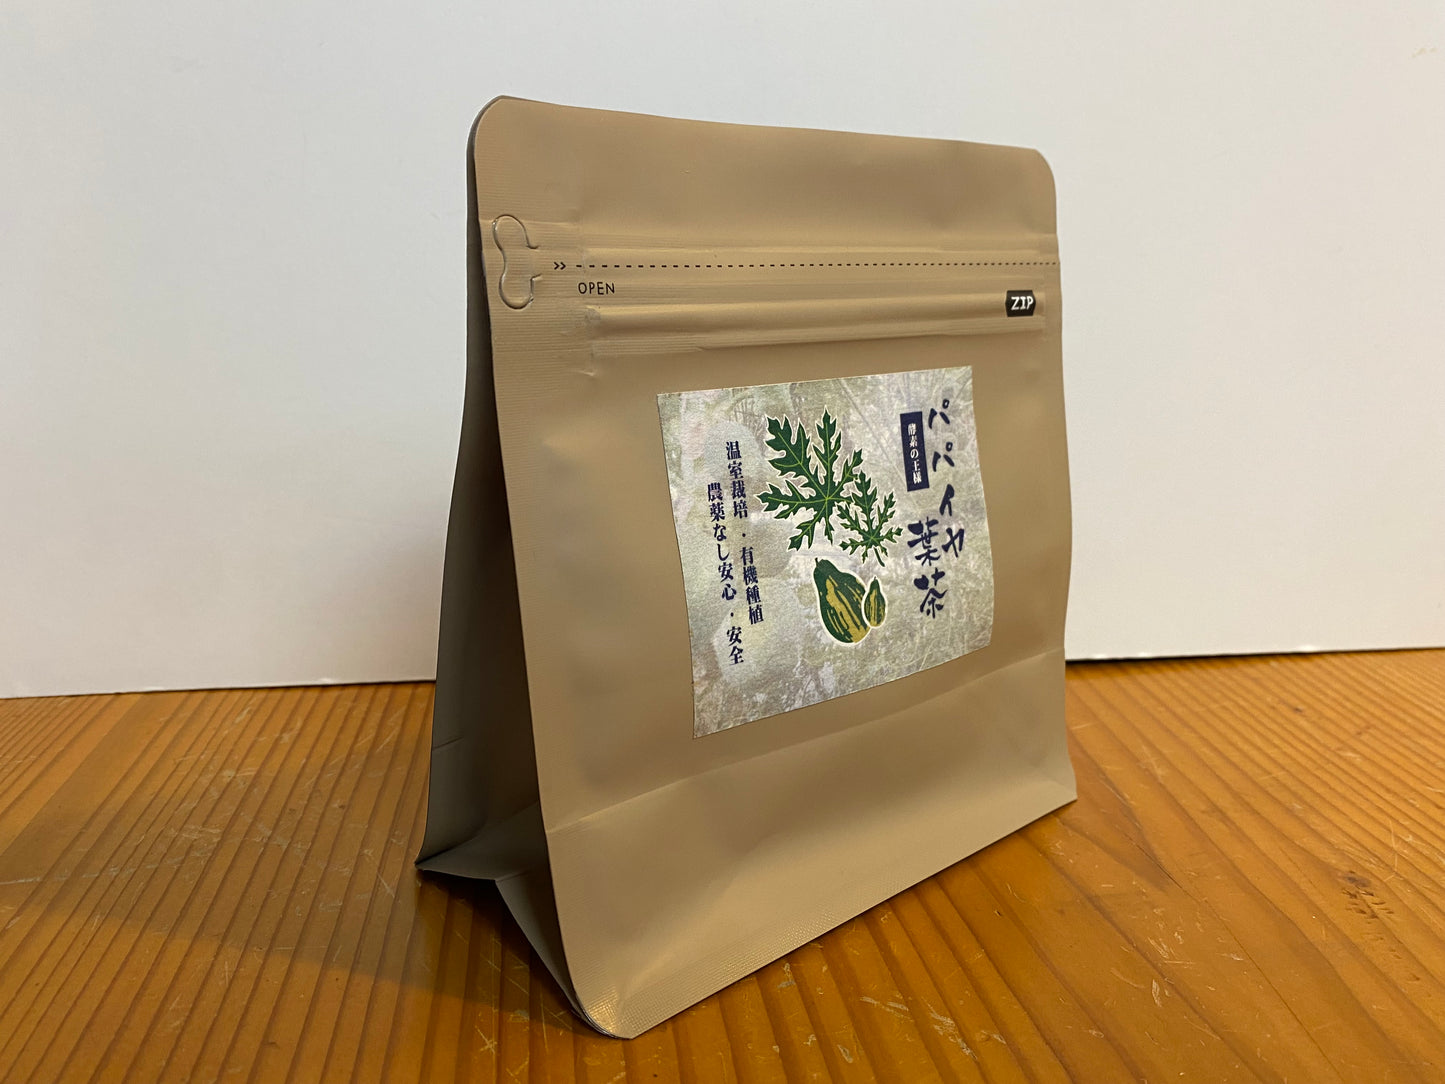 【日本產】補貨！！！天然有機木瓜葉茶パパイヤ茶(3g x 8包入)推廣價